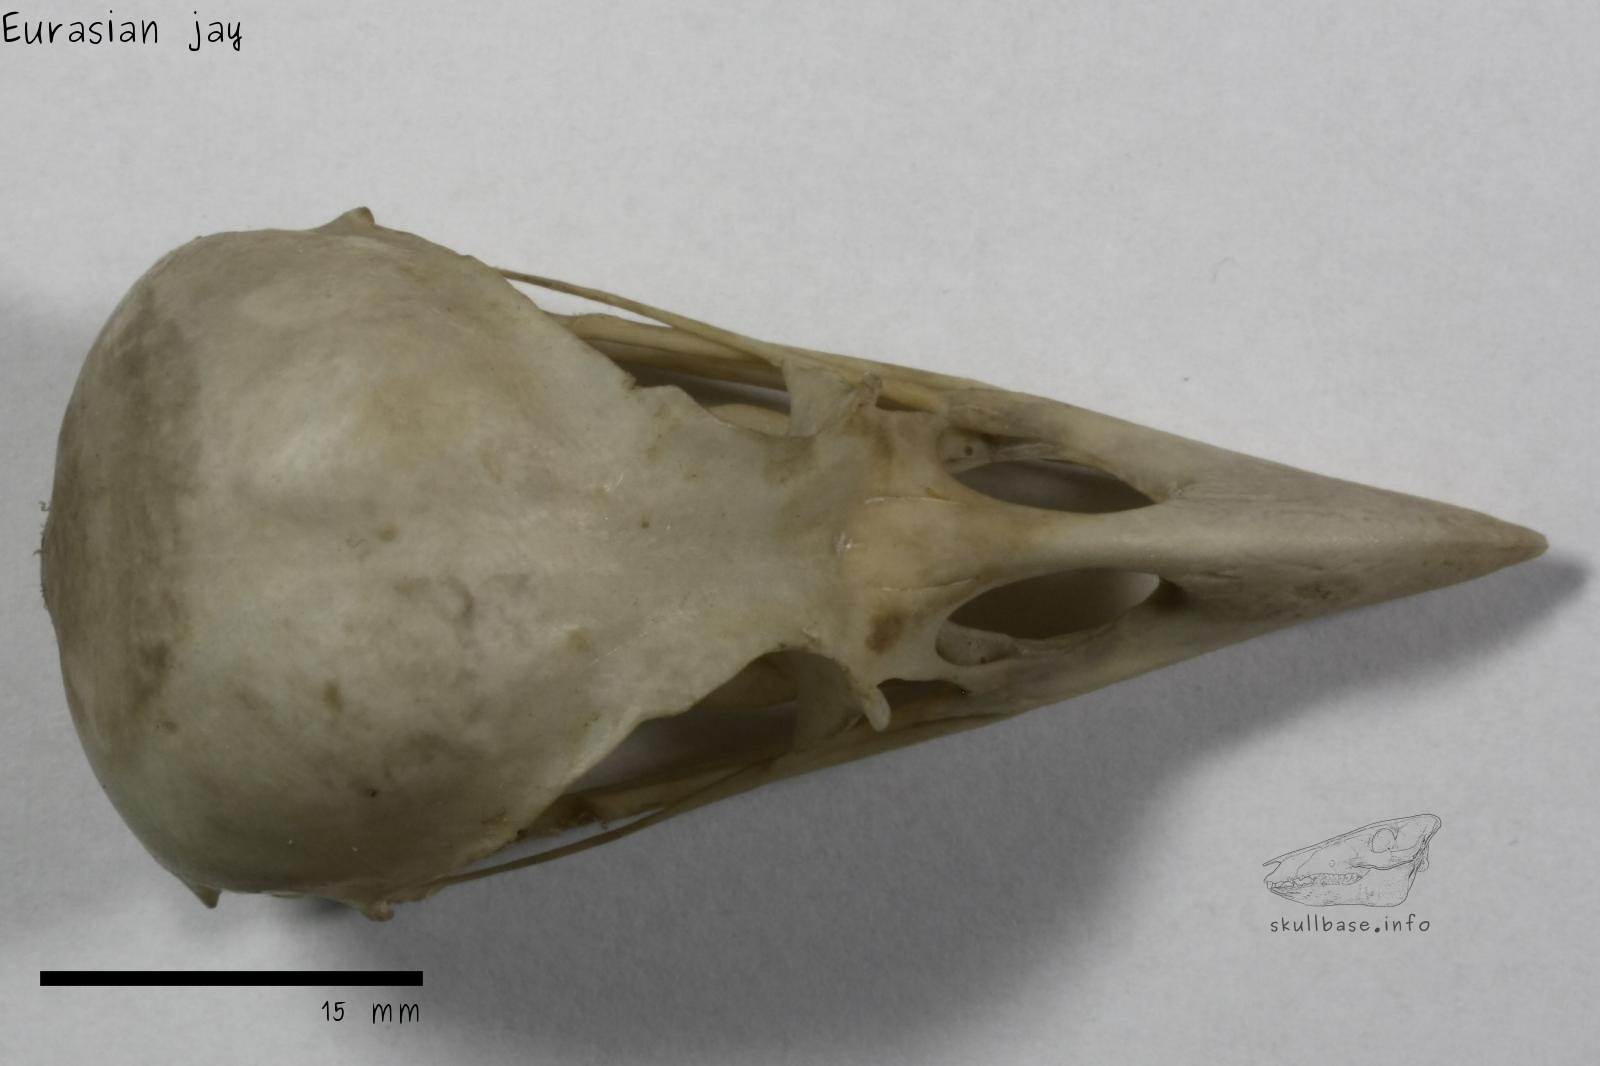 Eurasian jay (Garrulus glandarius) skull dorsal view